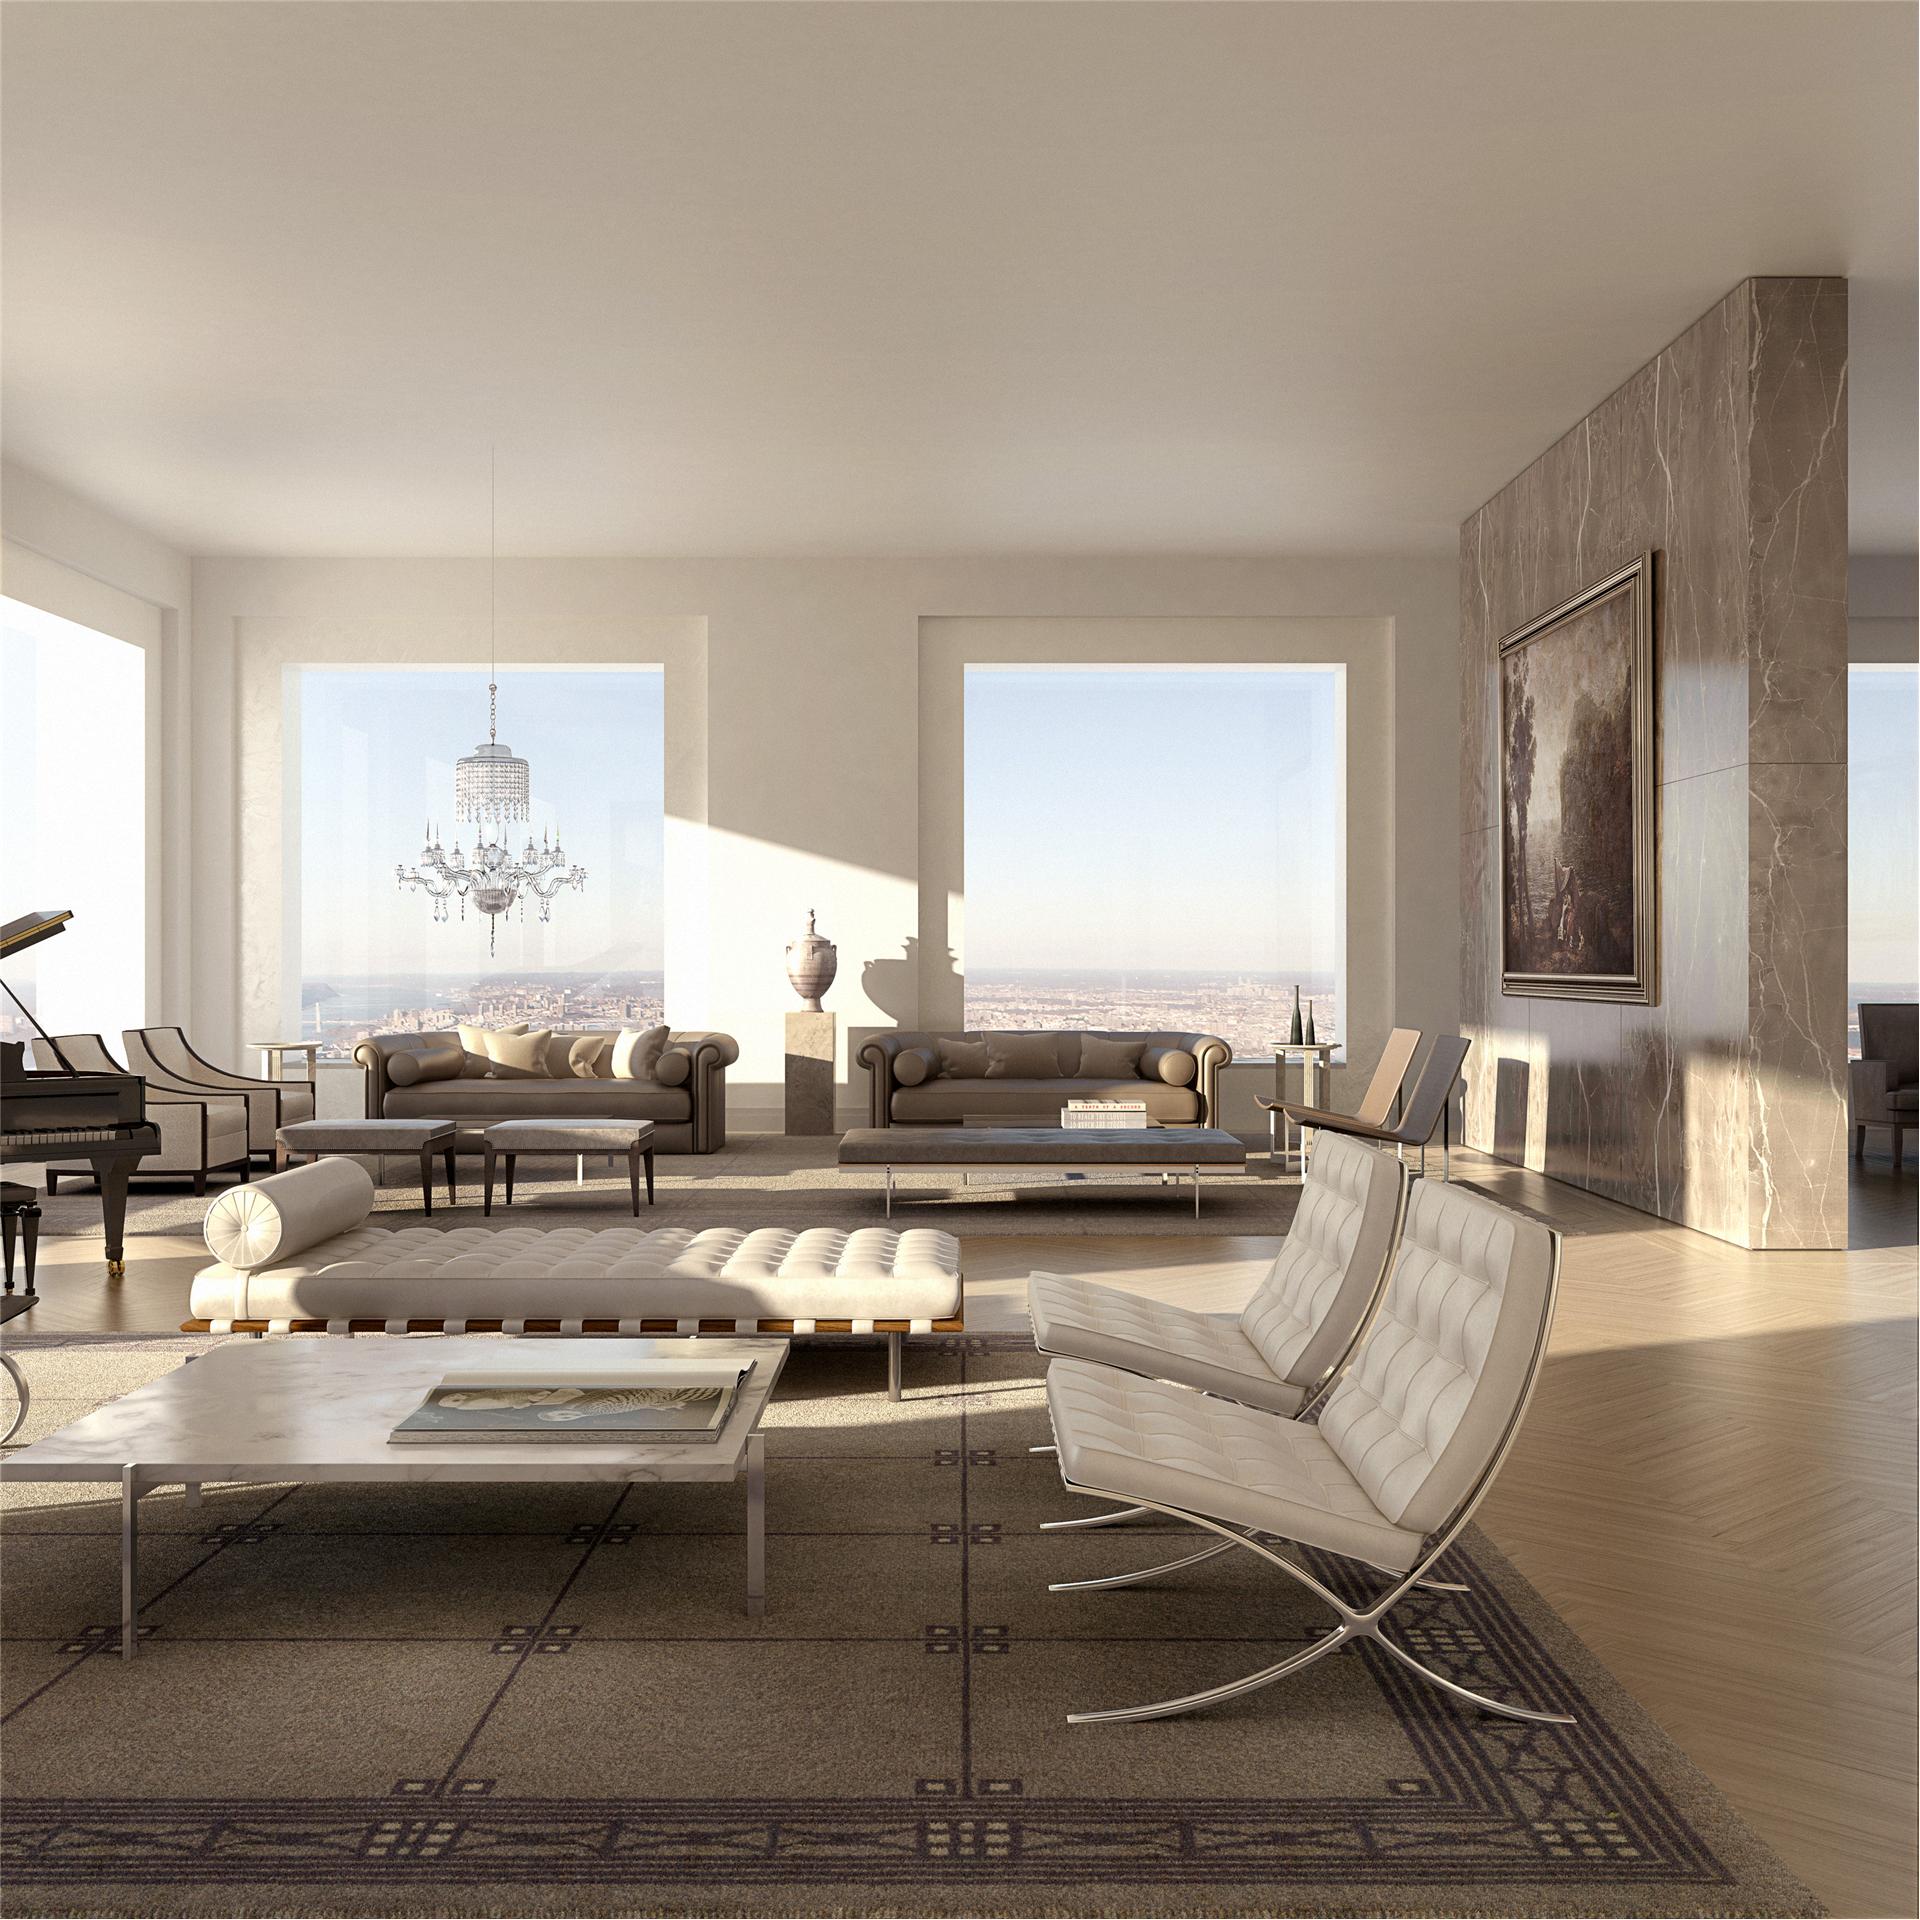 $95 Million Dollar Luxury Penthouse in New York-02